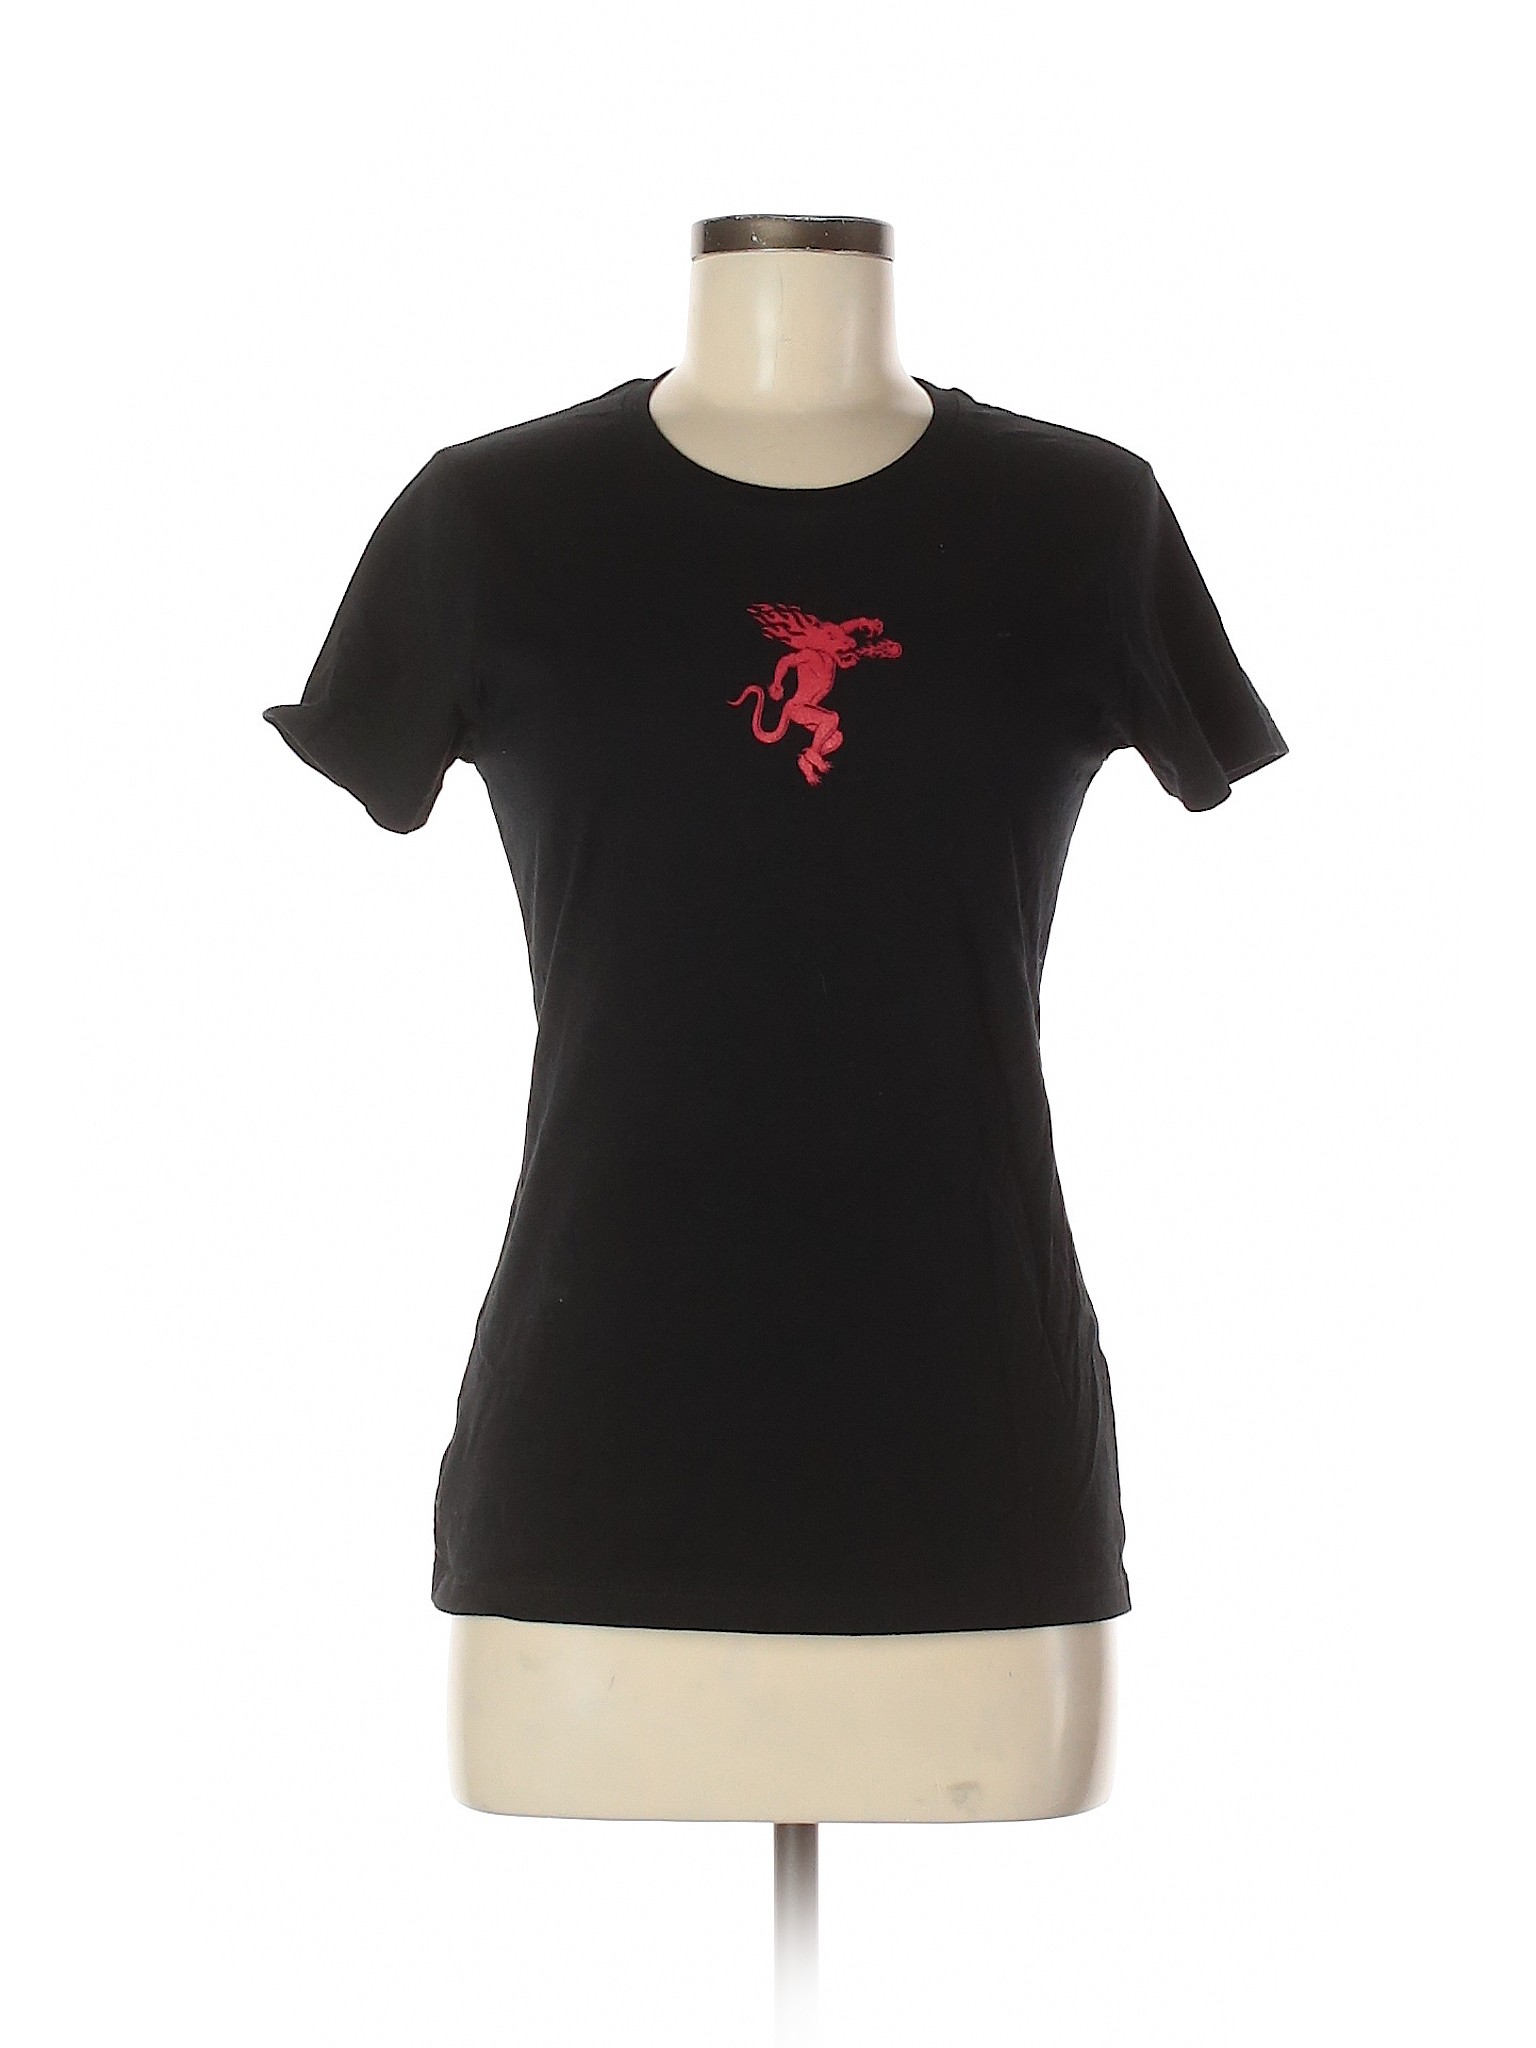 Alstyle Apparel And Activewear Women Black Short Sleeve T Shirt M Ebay 